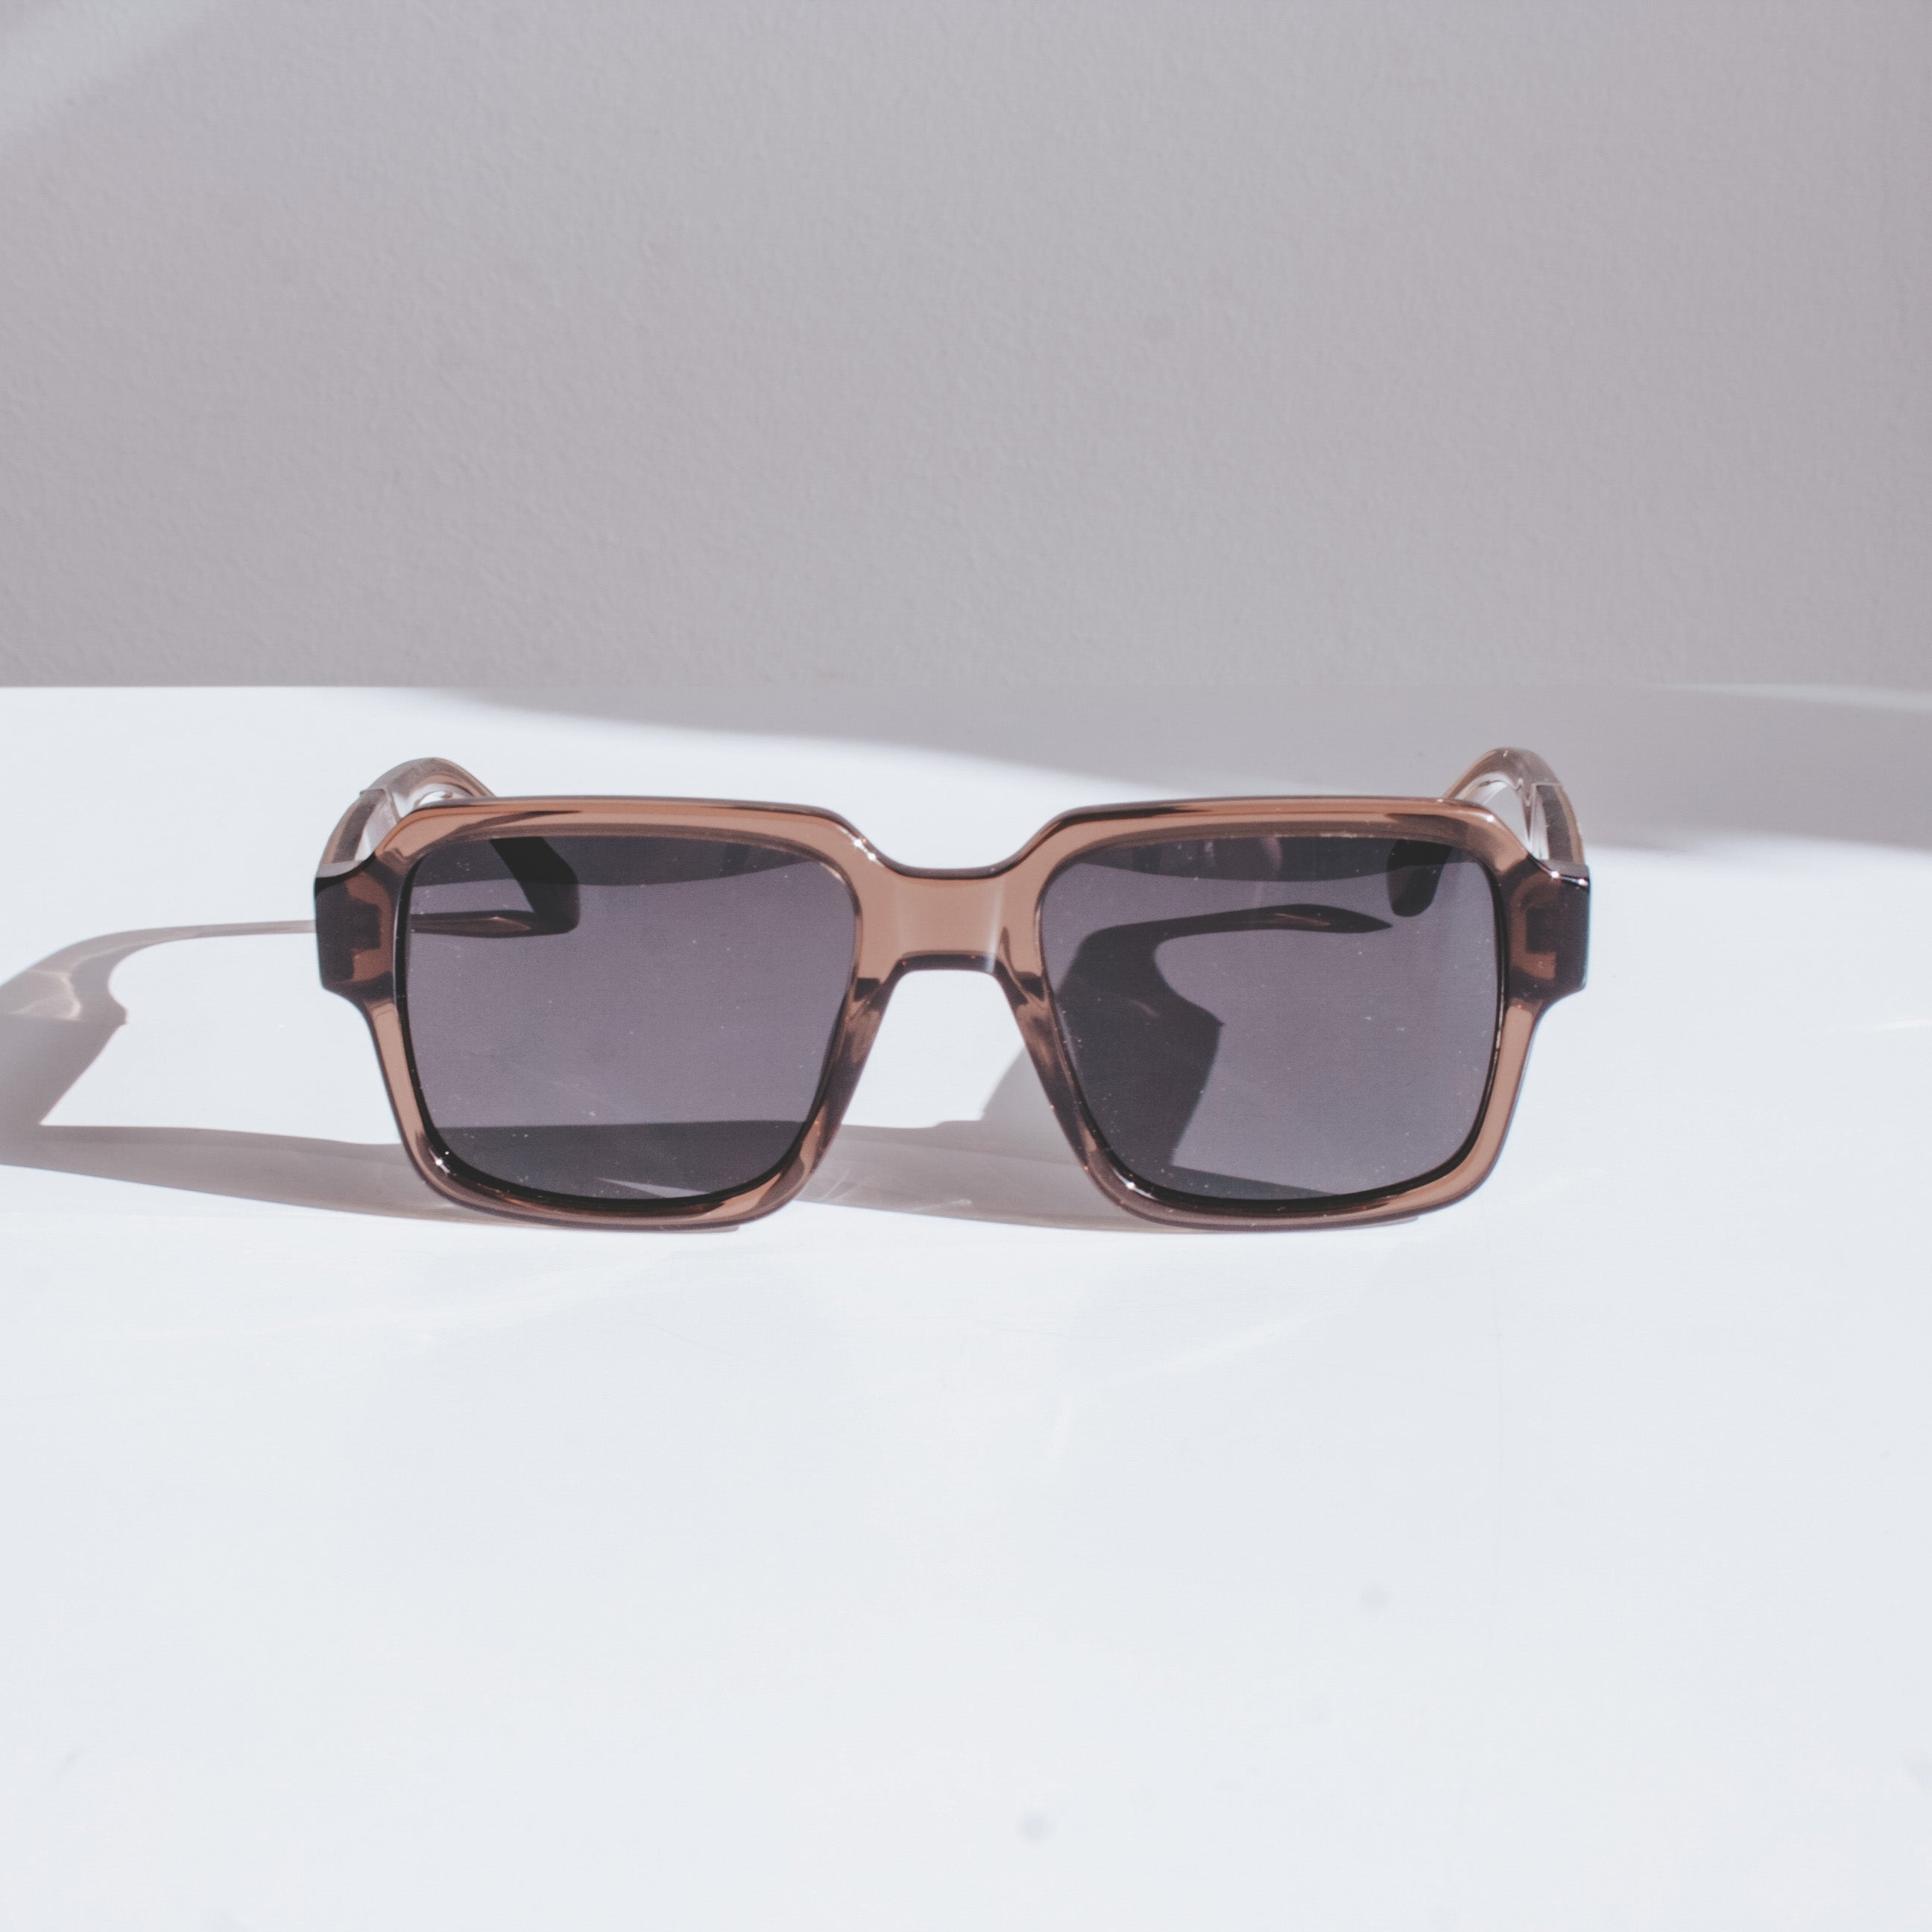 Wooden Sunglasses - WA06 - Earl Grey / Walnut